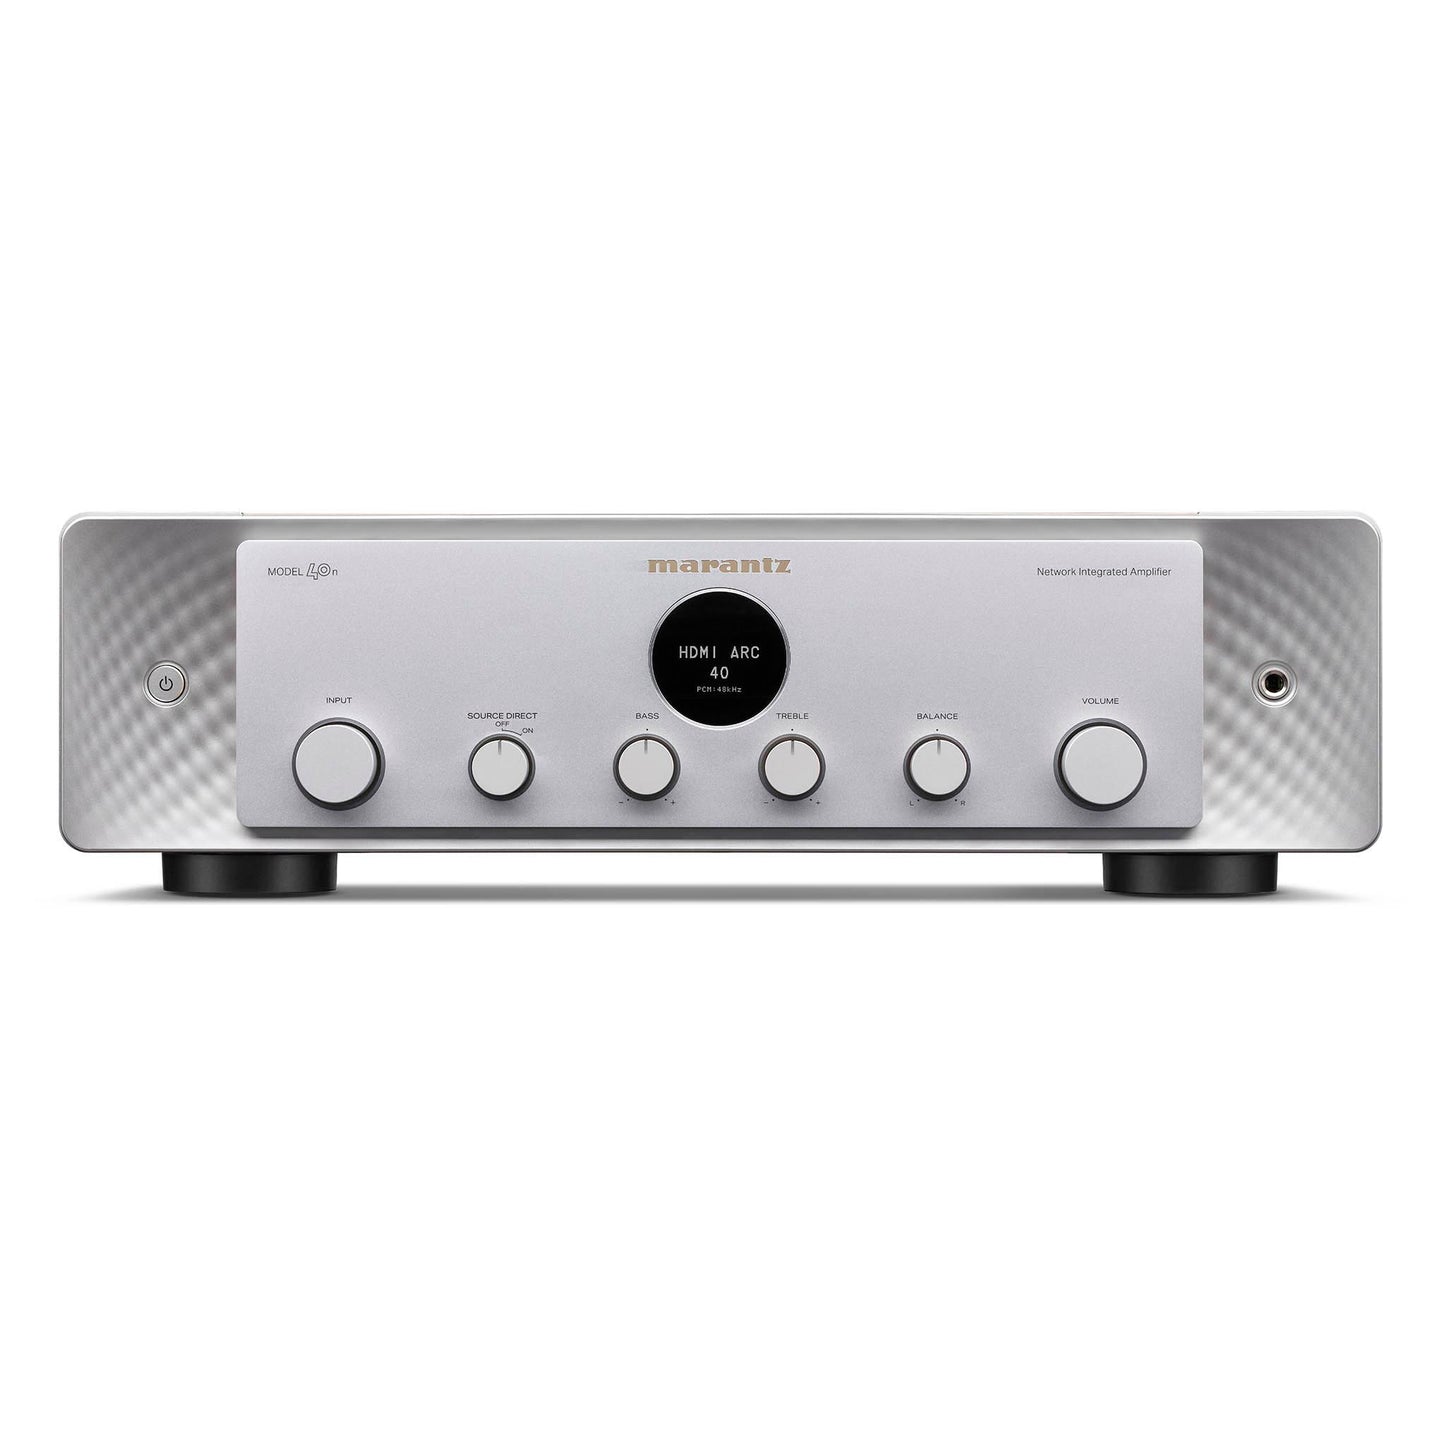 Marantz MODEL 40n Streaming Integrated Amplifier